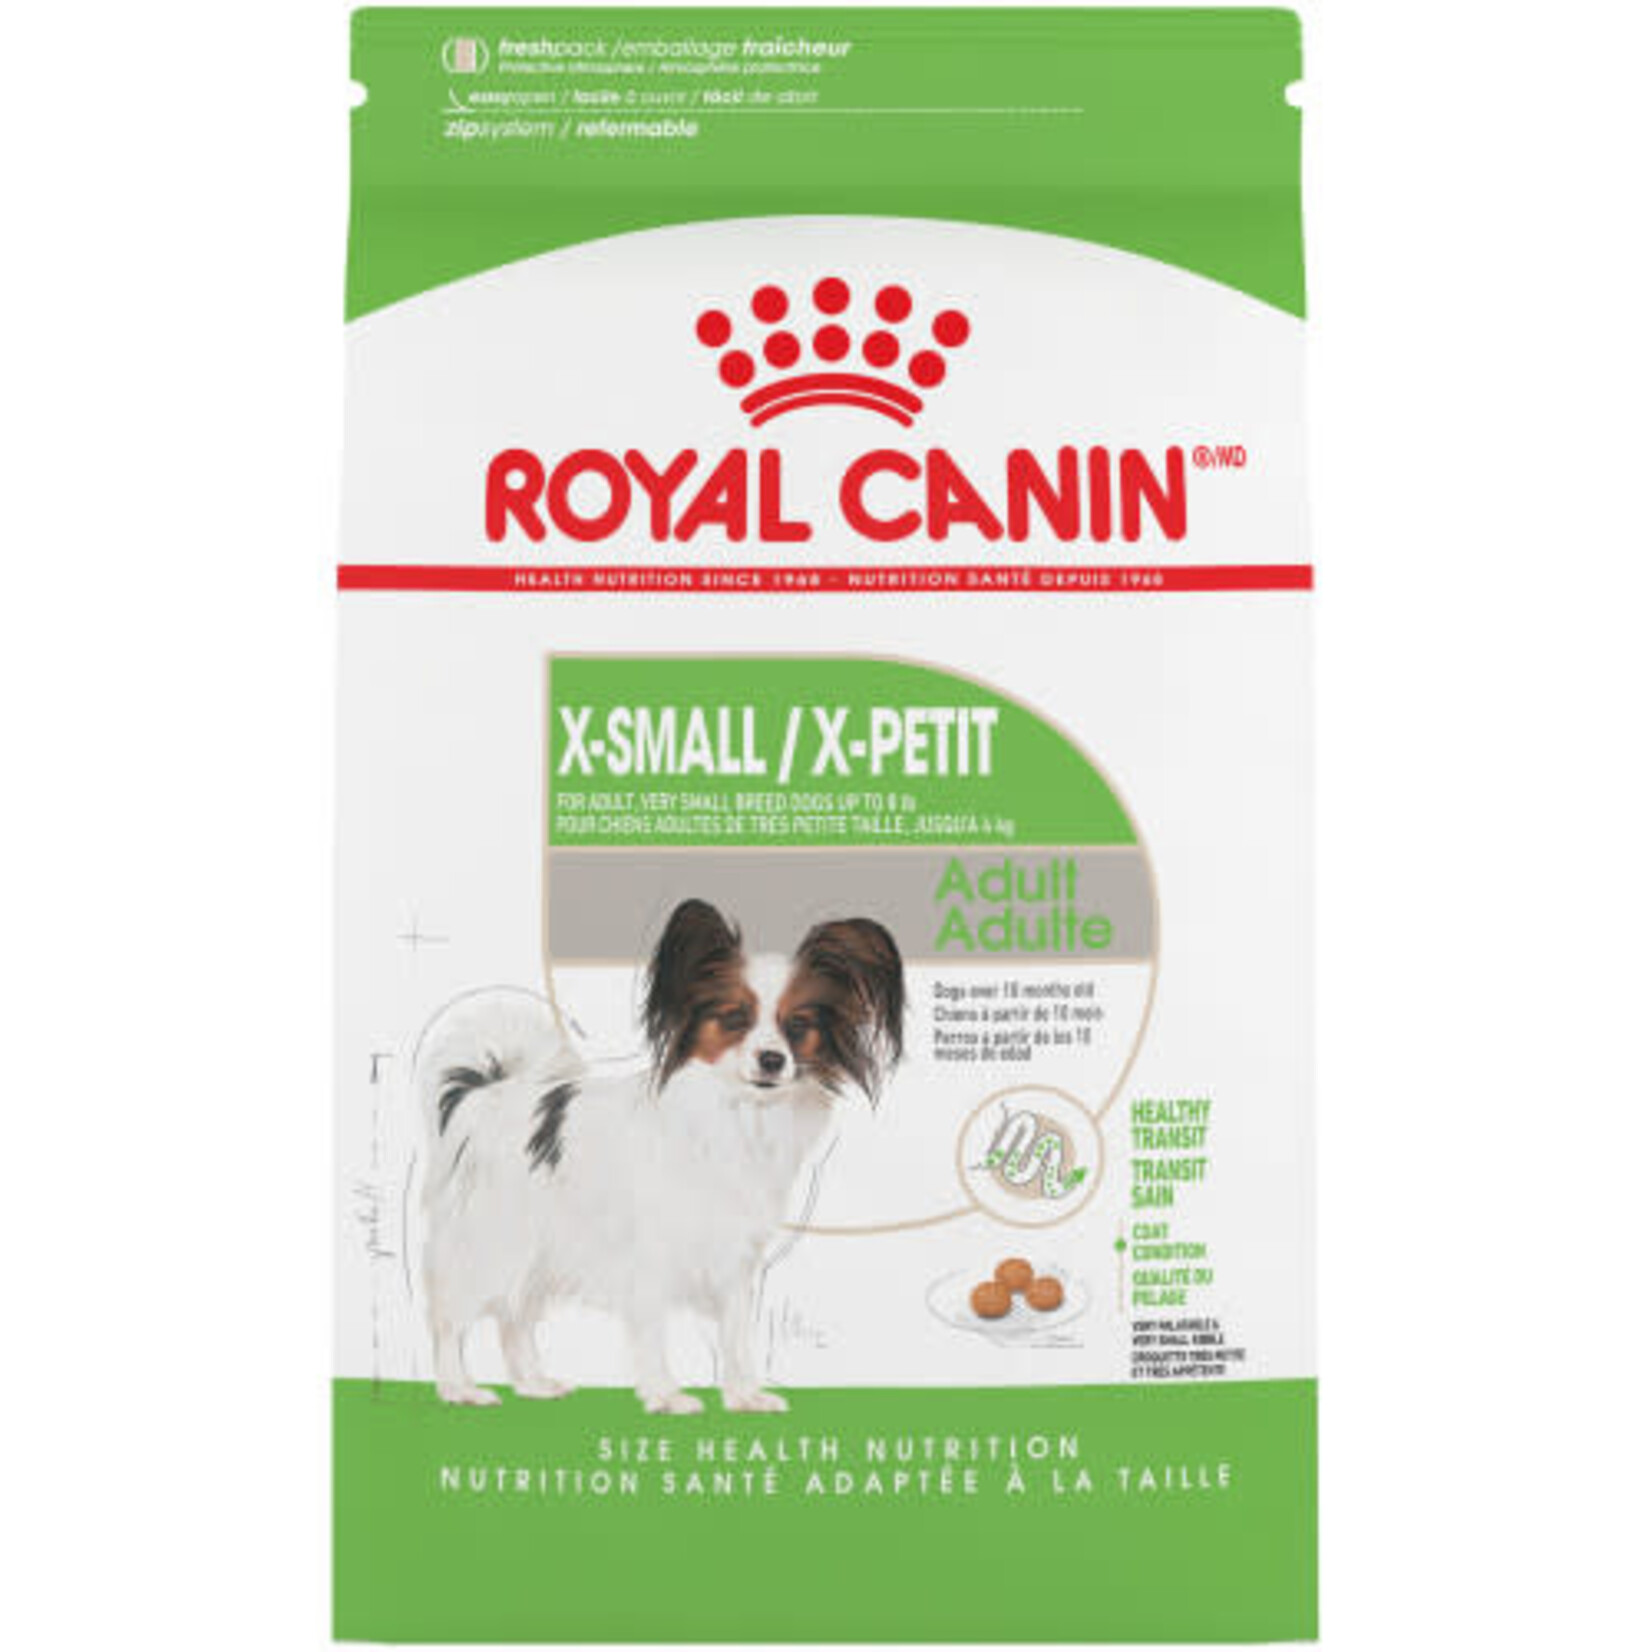 ROYAL CANIN ROYAL CANIN CHIEN X-PETIT ADULTE 1.1 KG